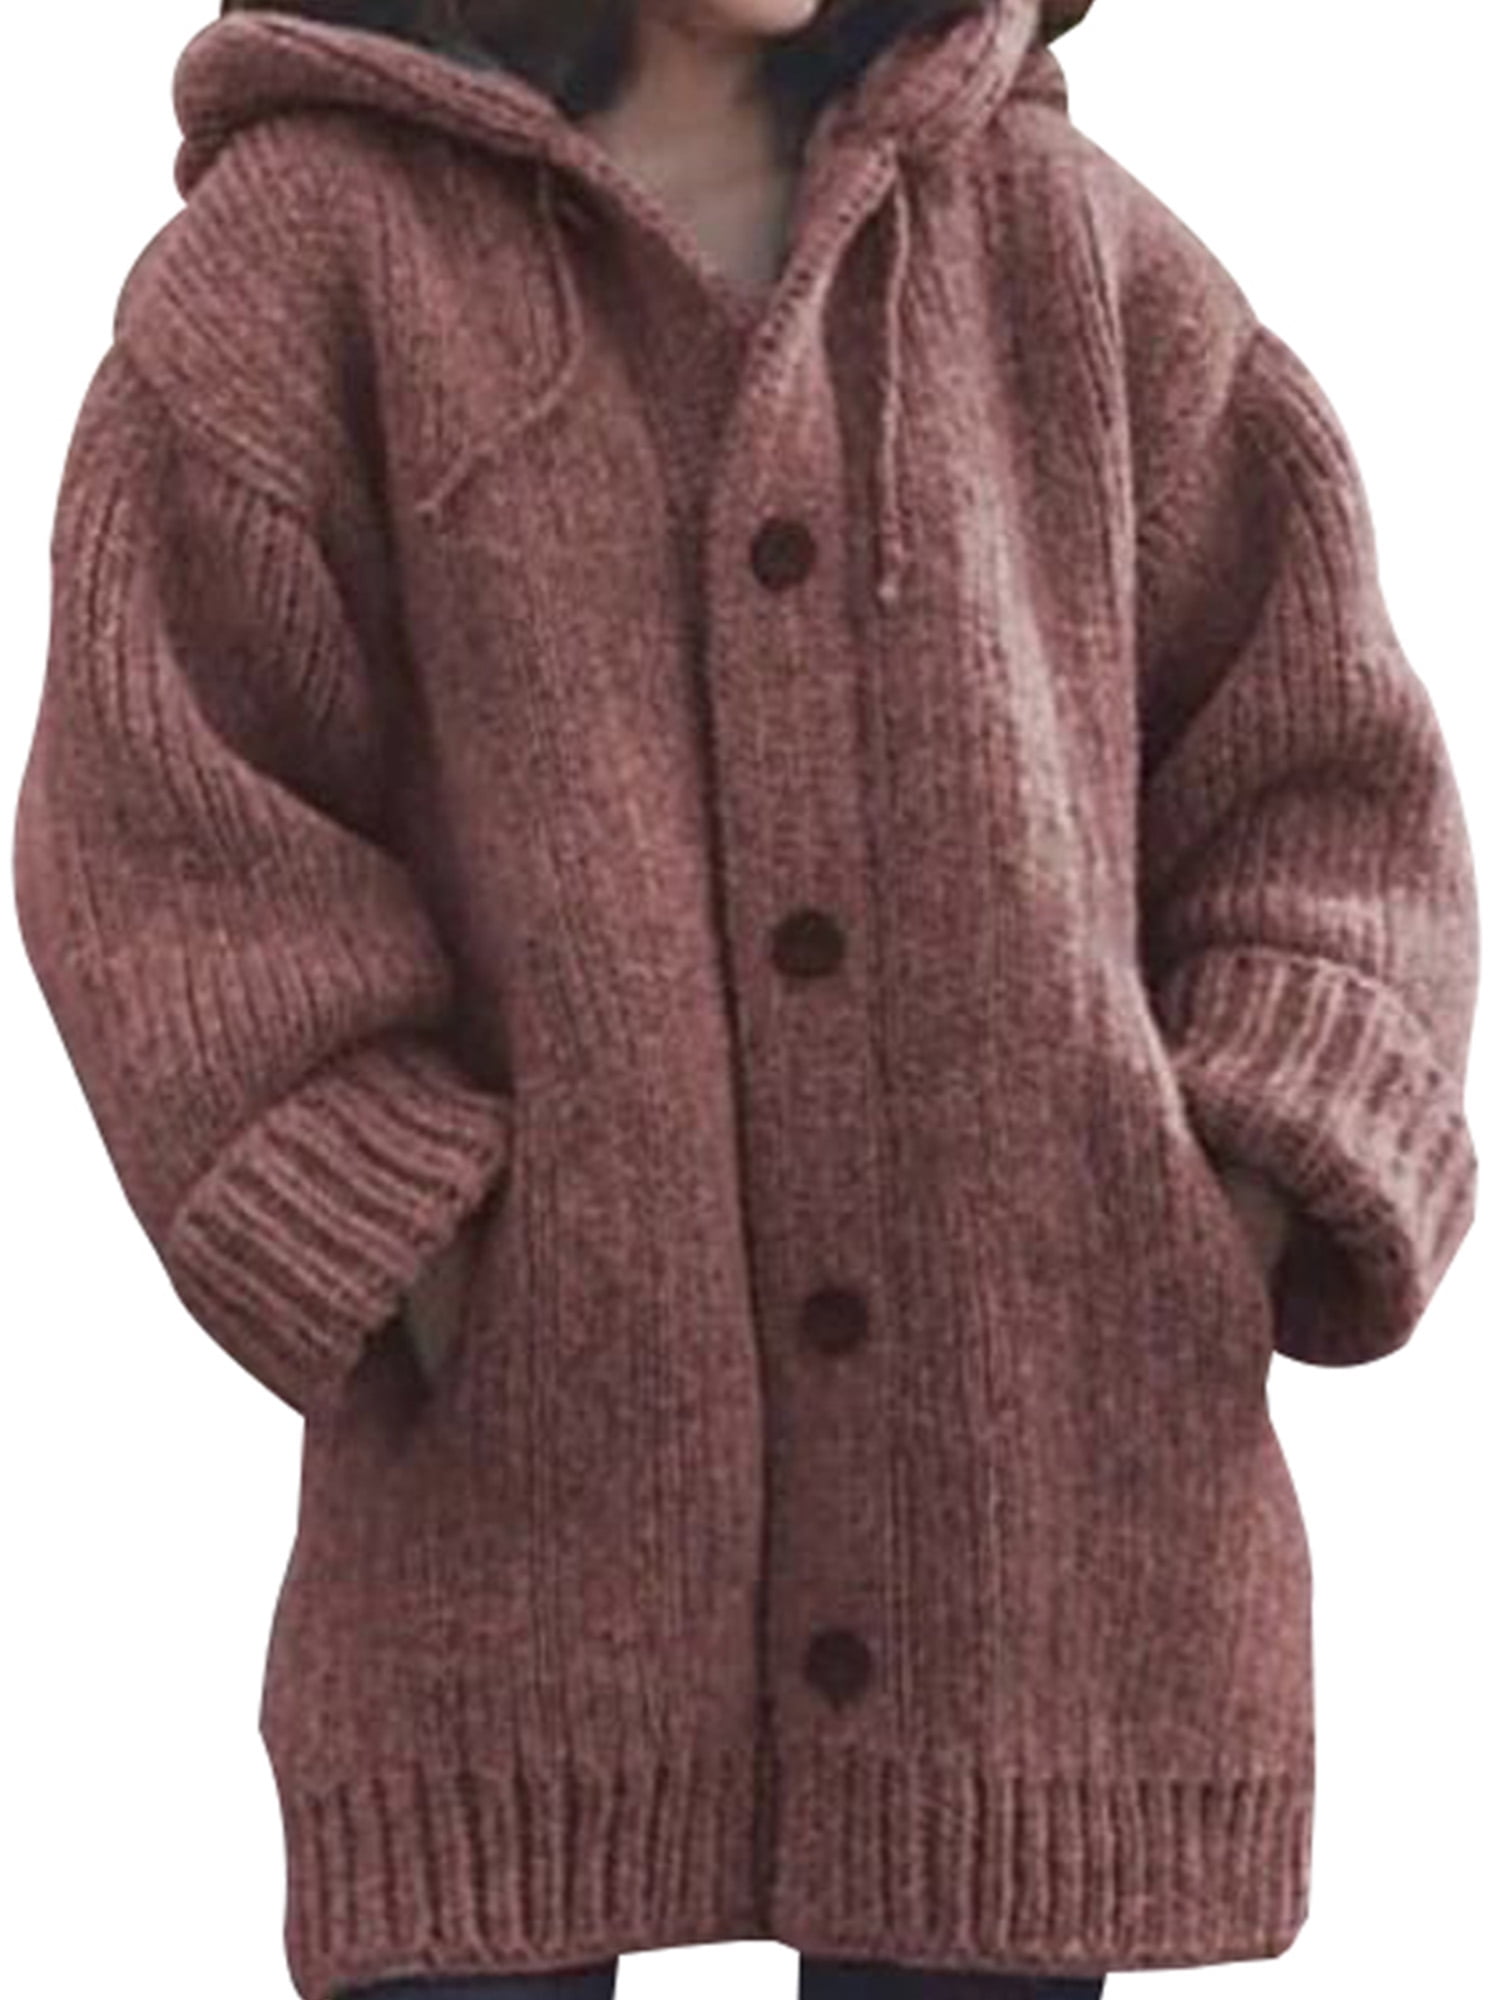 Fenleo Mens Sweater Casual Autumn Winter Zipper Fleece Hoodie Outwear Tops Cardigan Blouse Coat